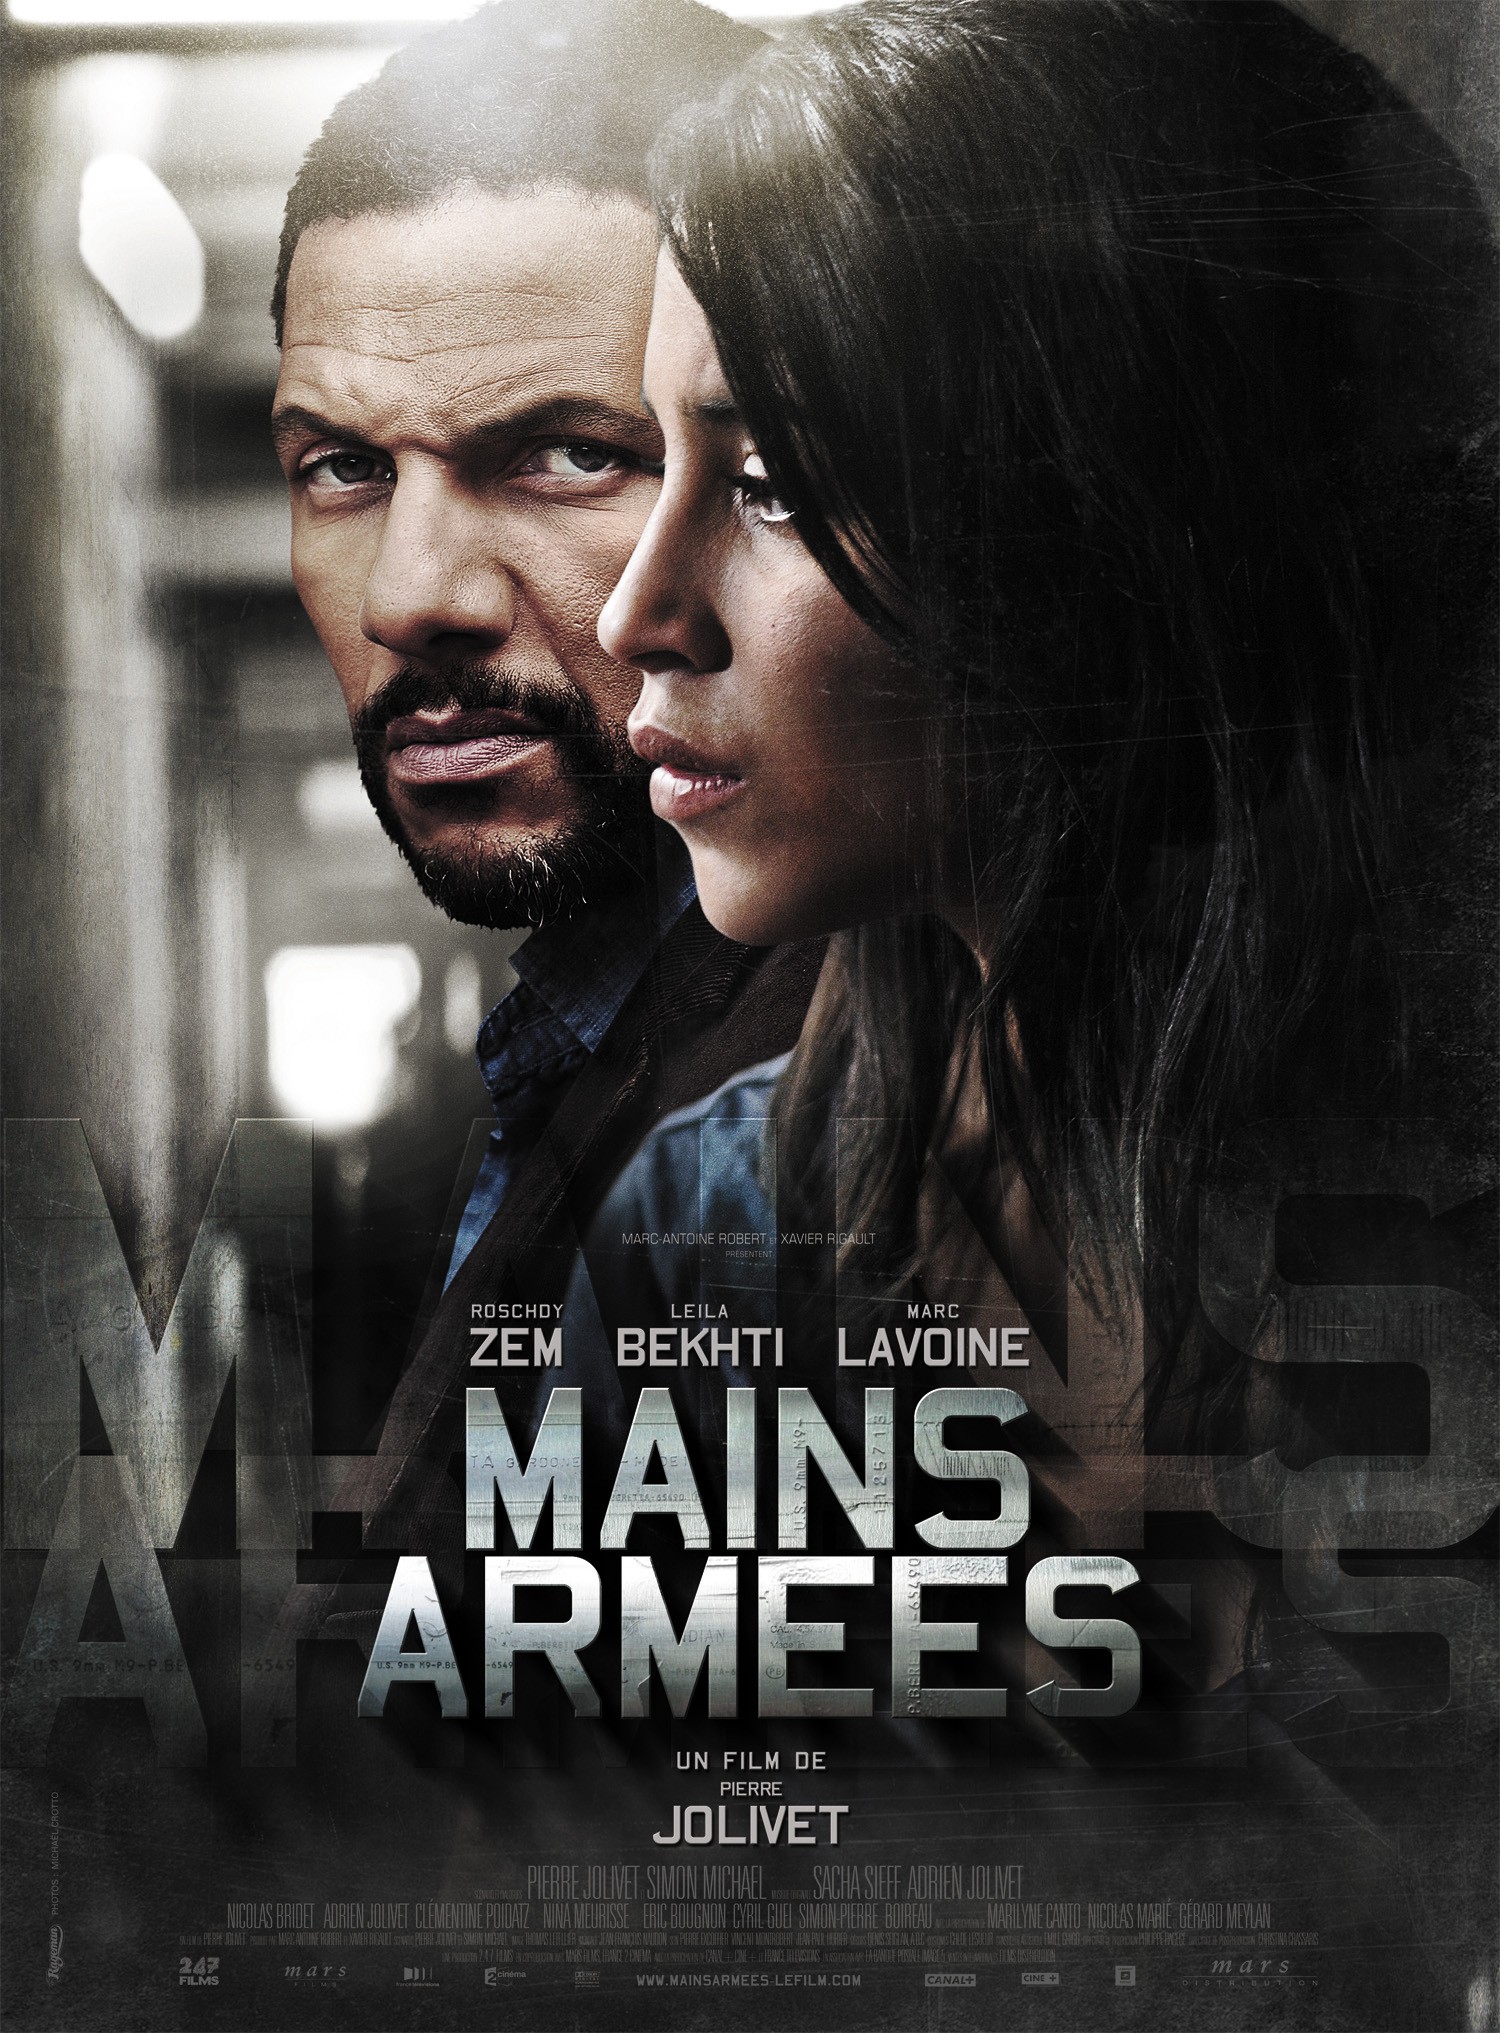 Mega Sized Movie Poster Image for Mains armées (#2 of 2)